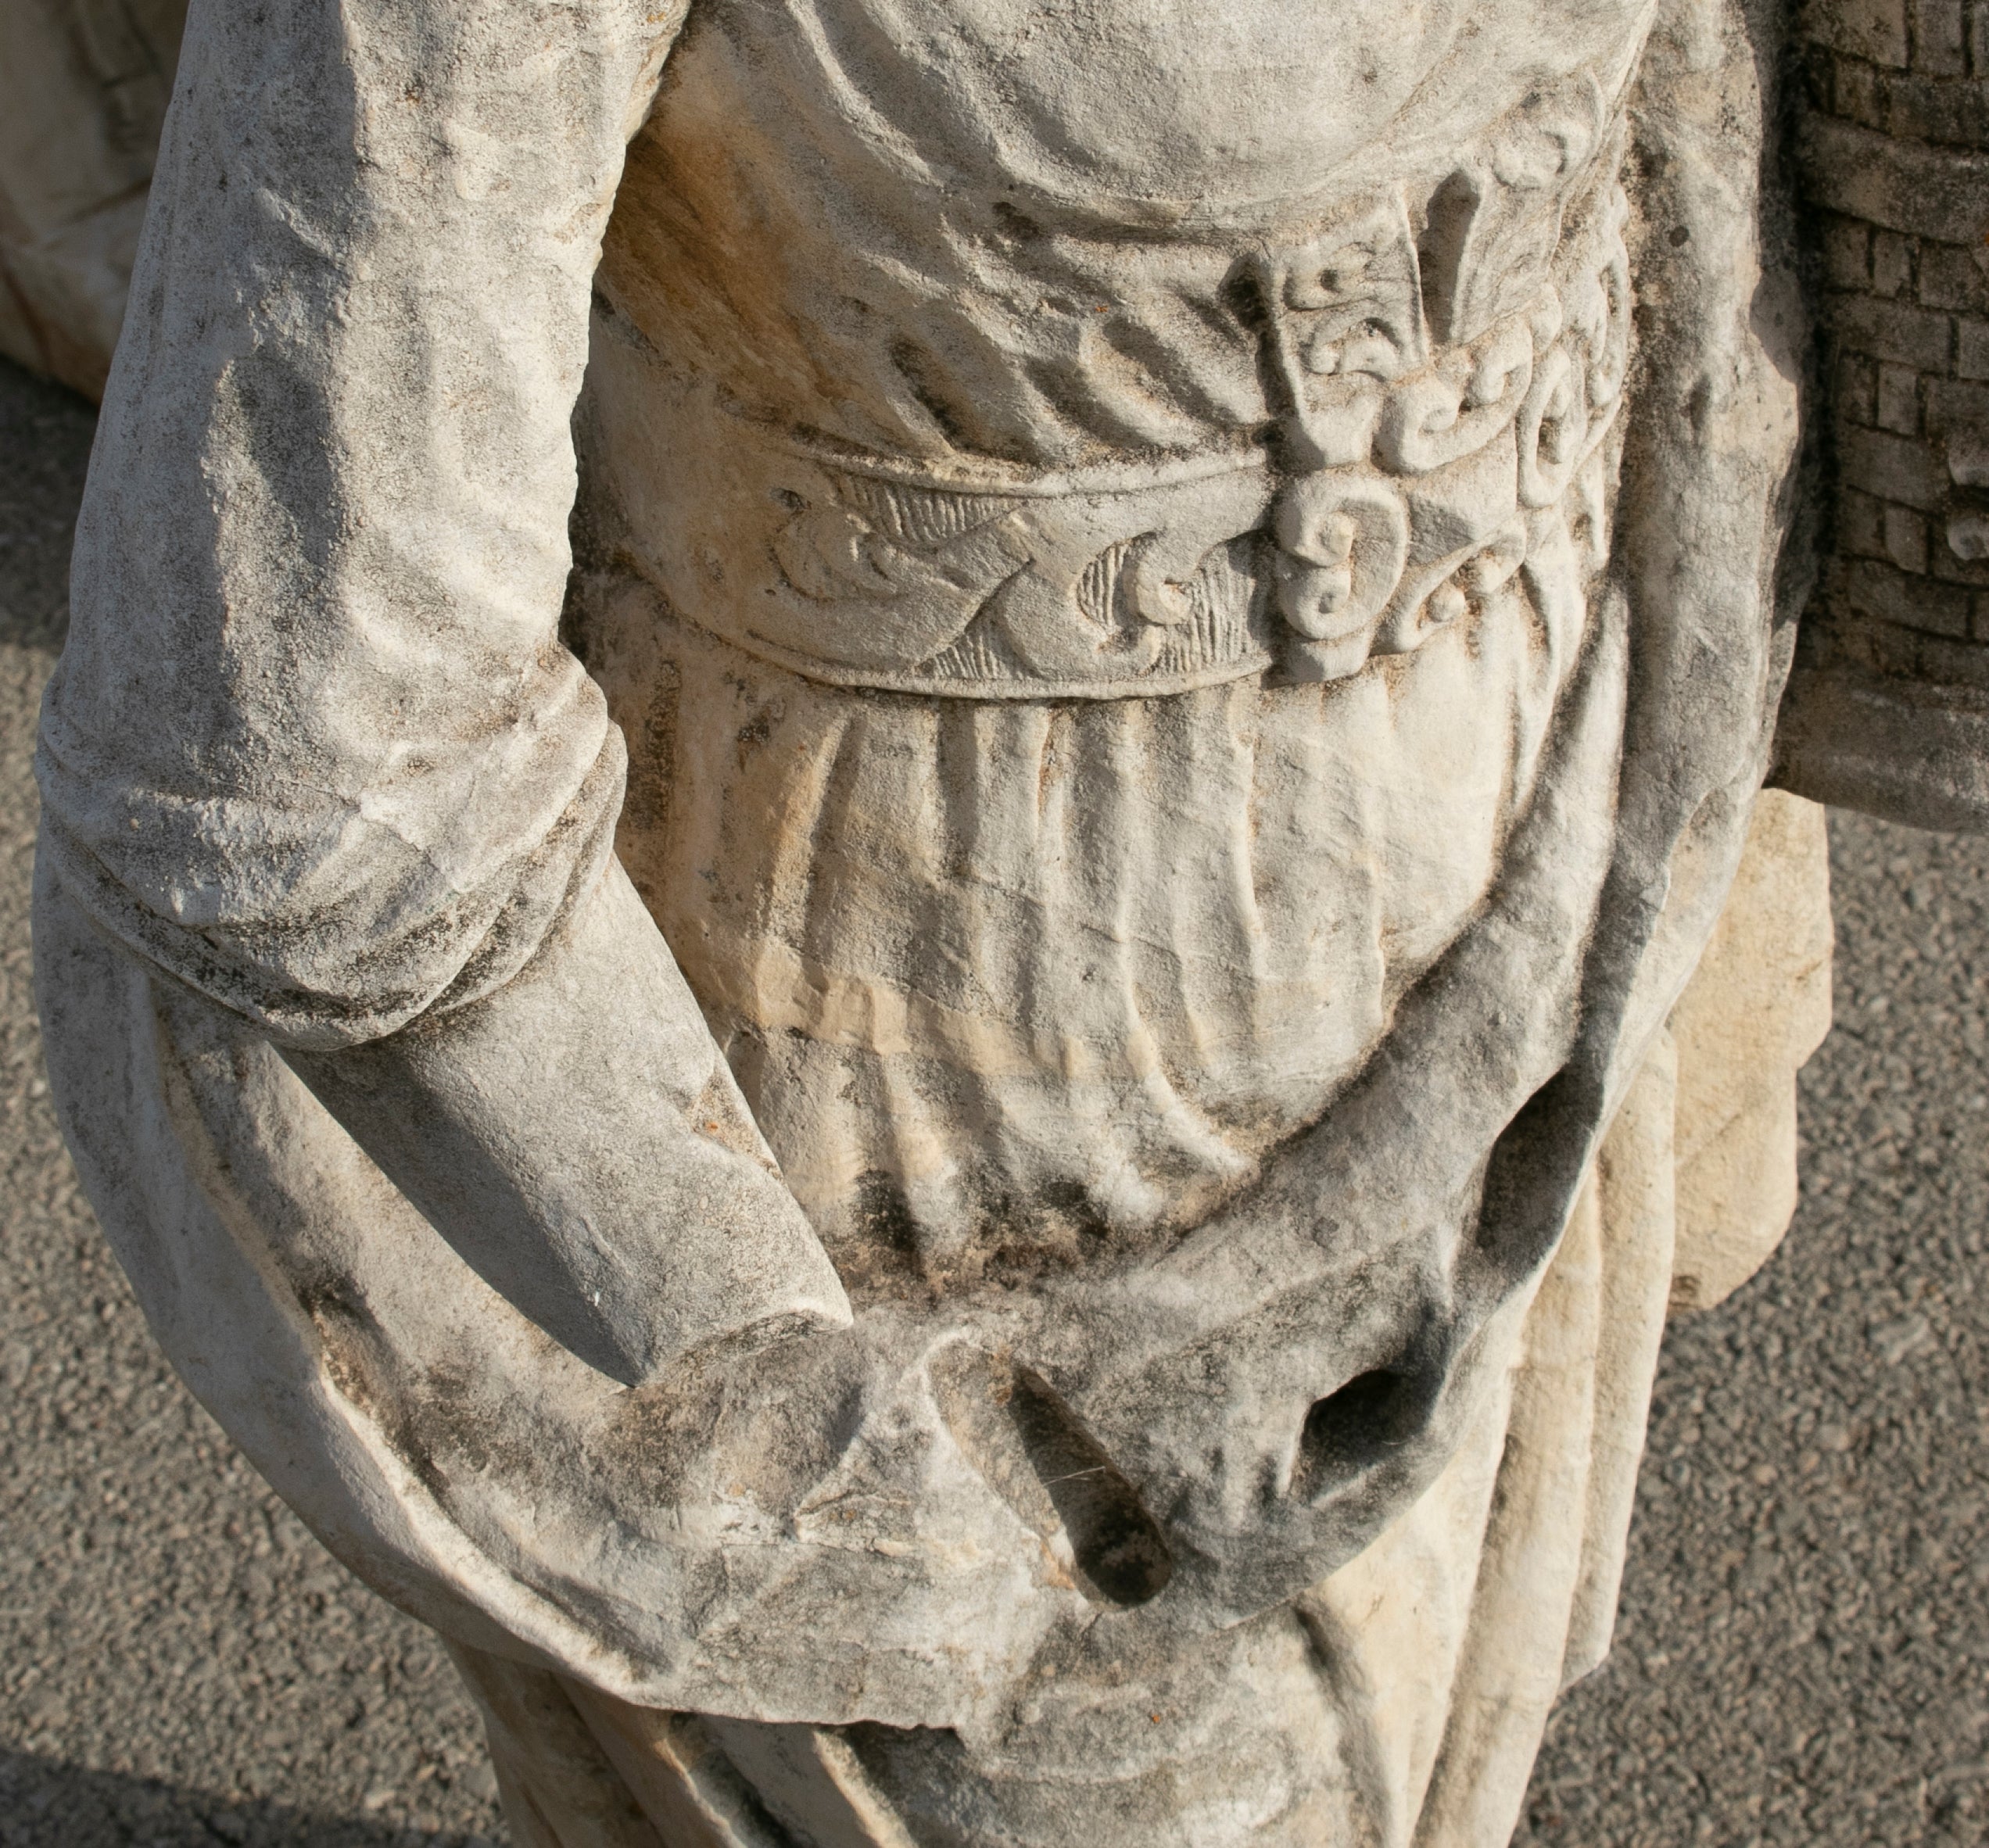 Escultura de Piedra Tallada a Mano de Santa Catalina de Palma, España, del Siglo XVIII